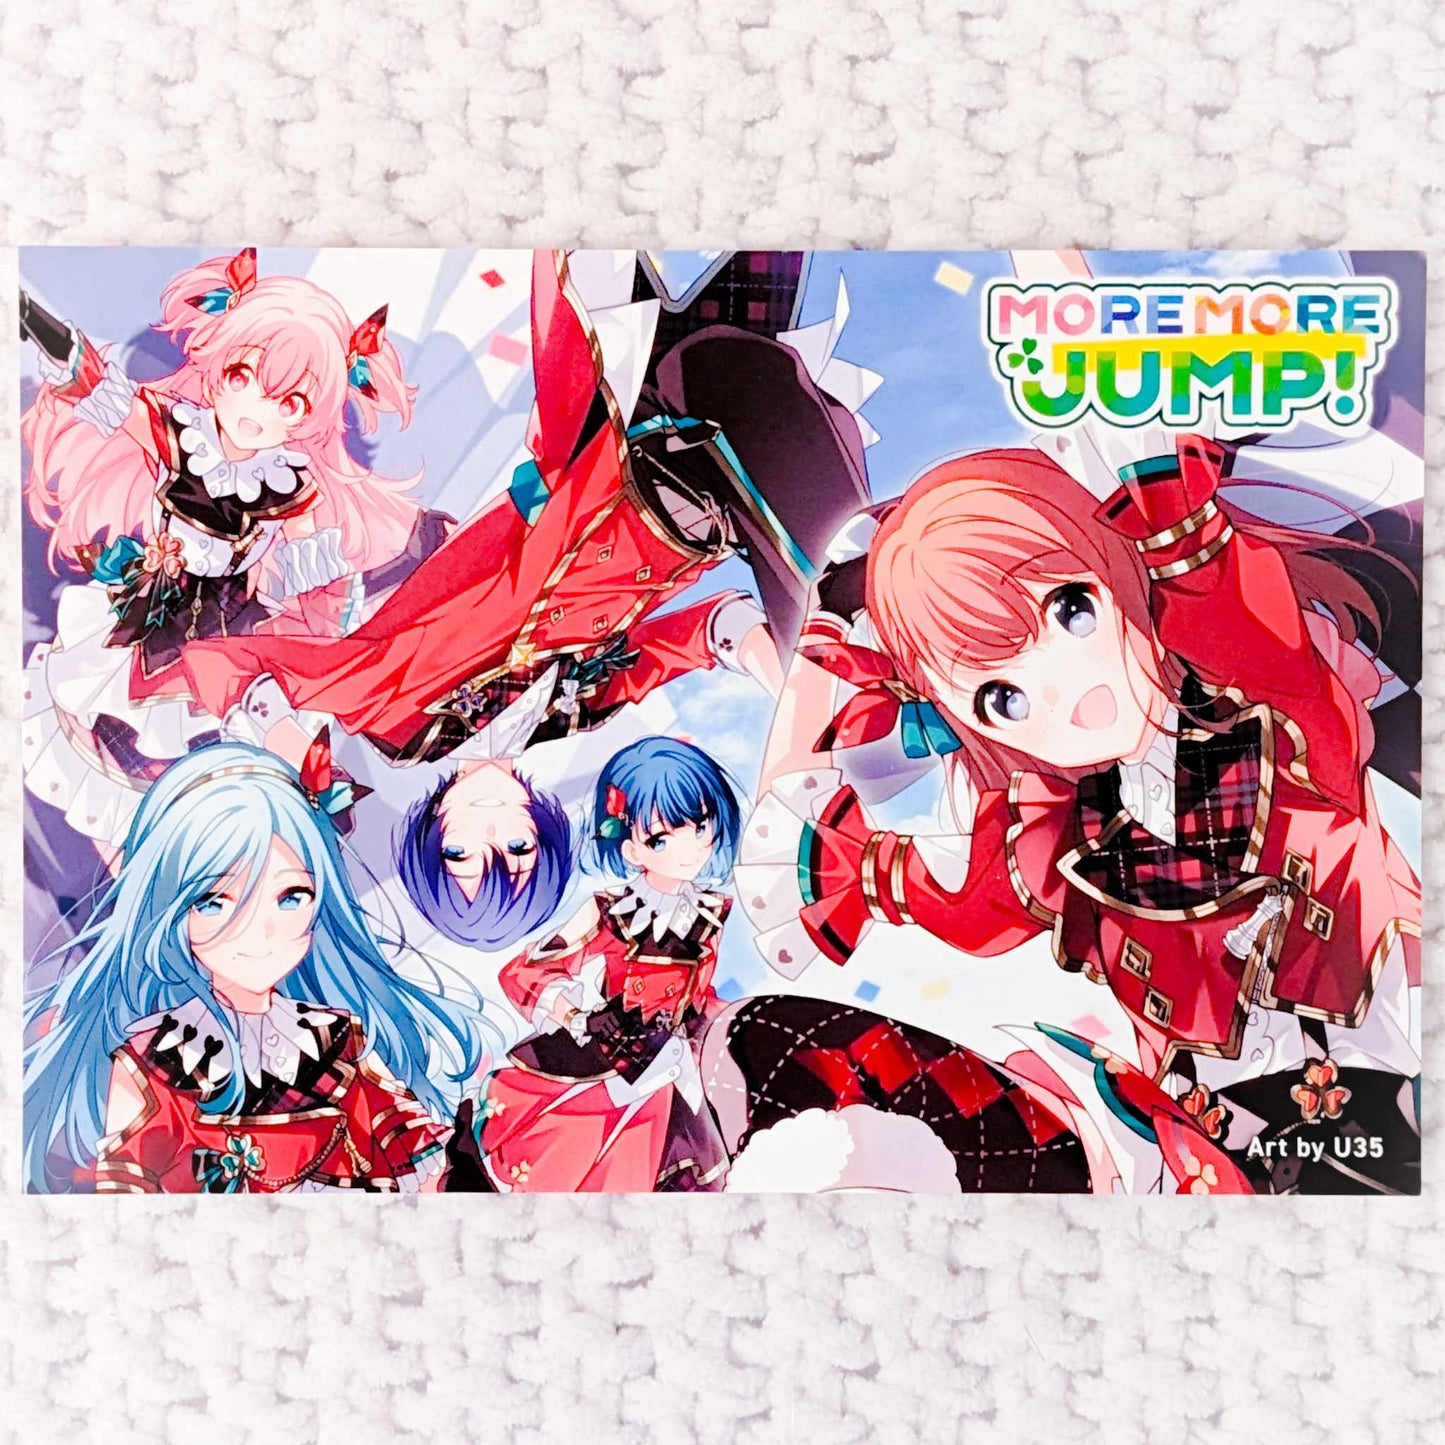 More More Jump! - Project Sekai Hatsune Miku Colorful Stage Art Postcard